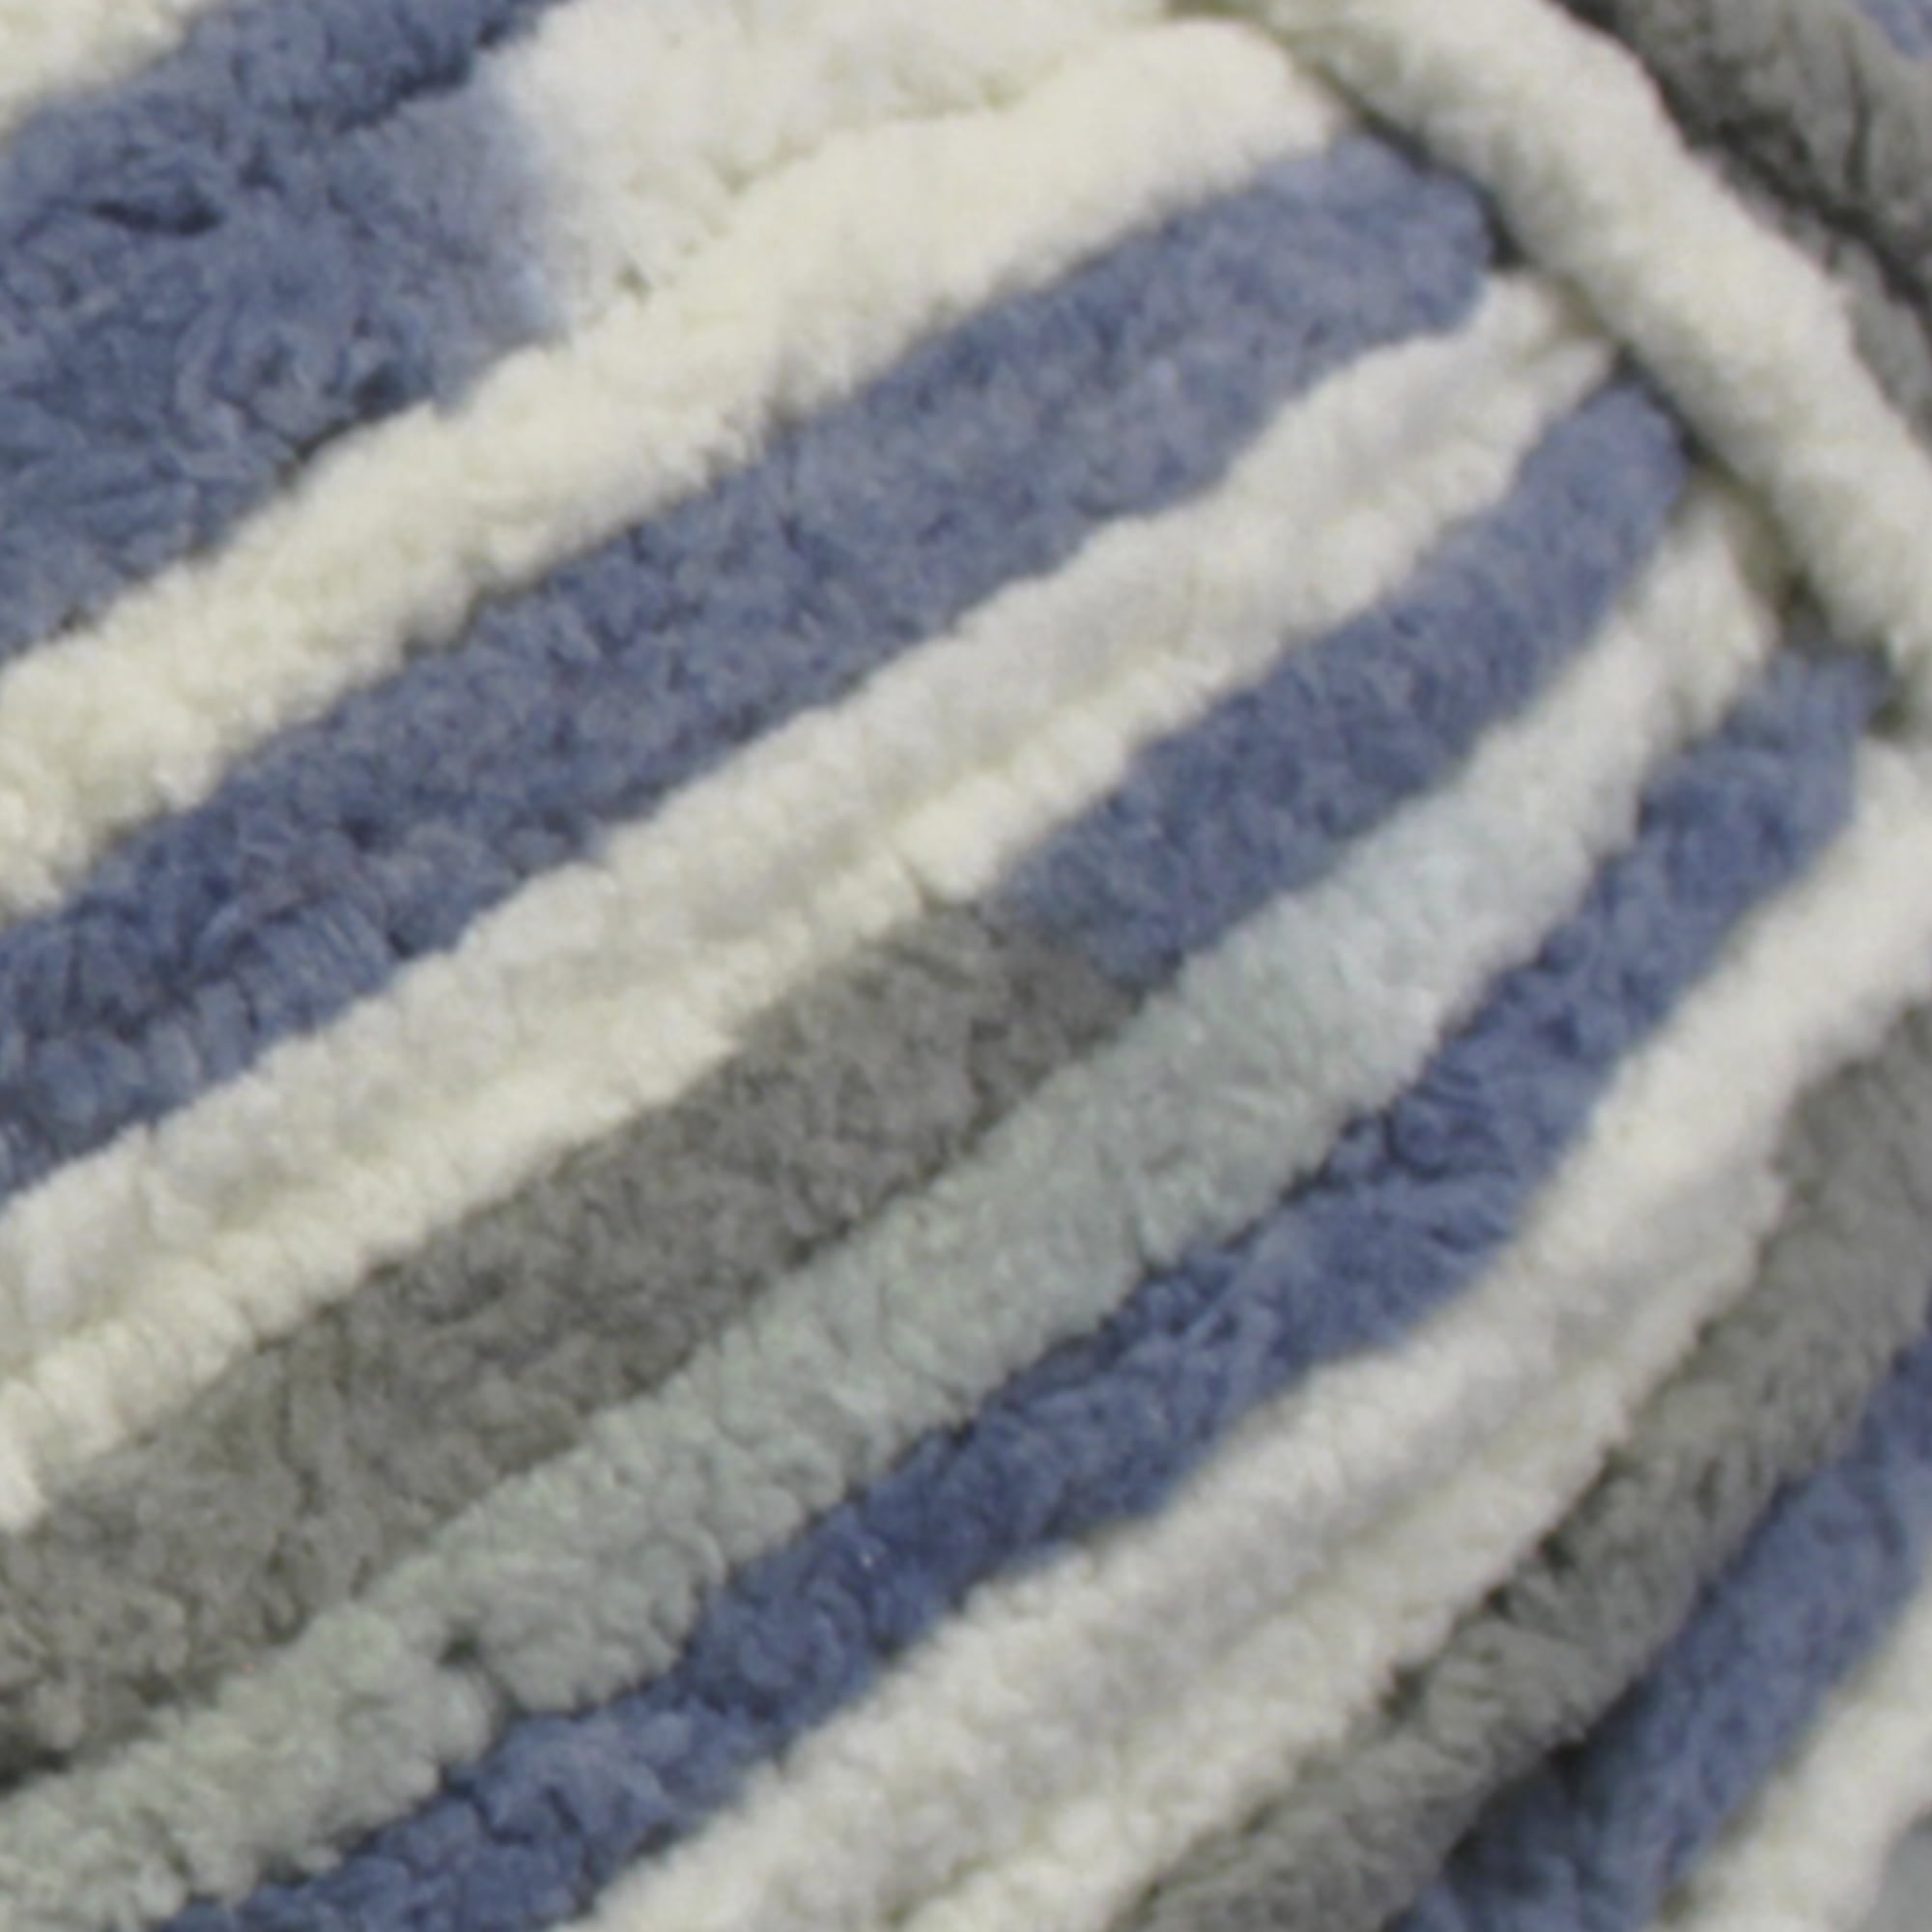 GRAY STORM VARG 10959 Bernat Blanket Yarn220yds10.5 Oz300g Super Bulky 6  Black White and Gray Yarn Crochet knitting Dcoyshouseofyarn 